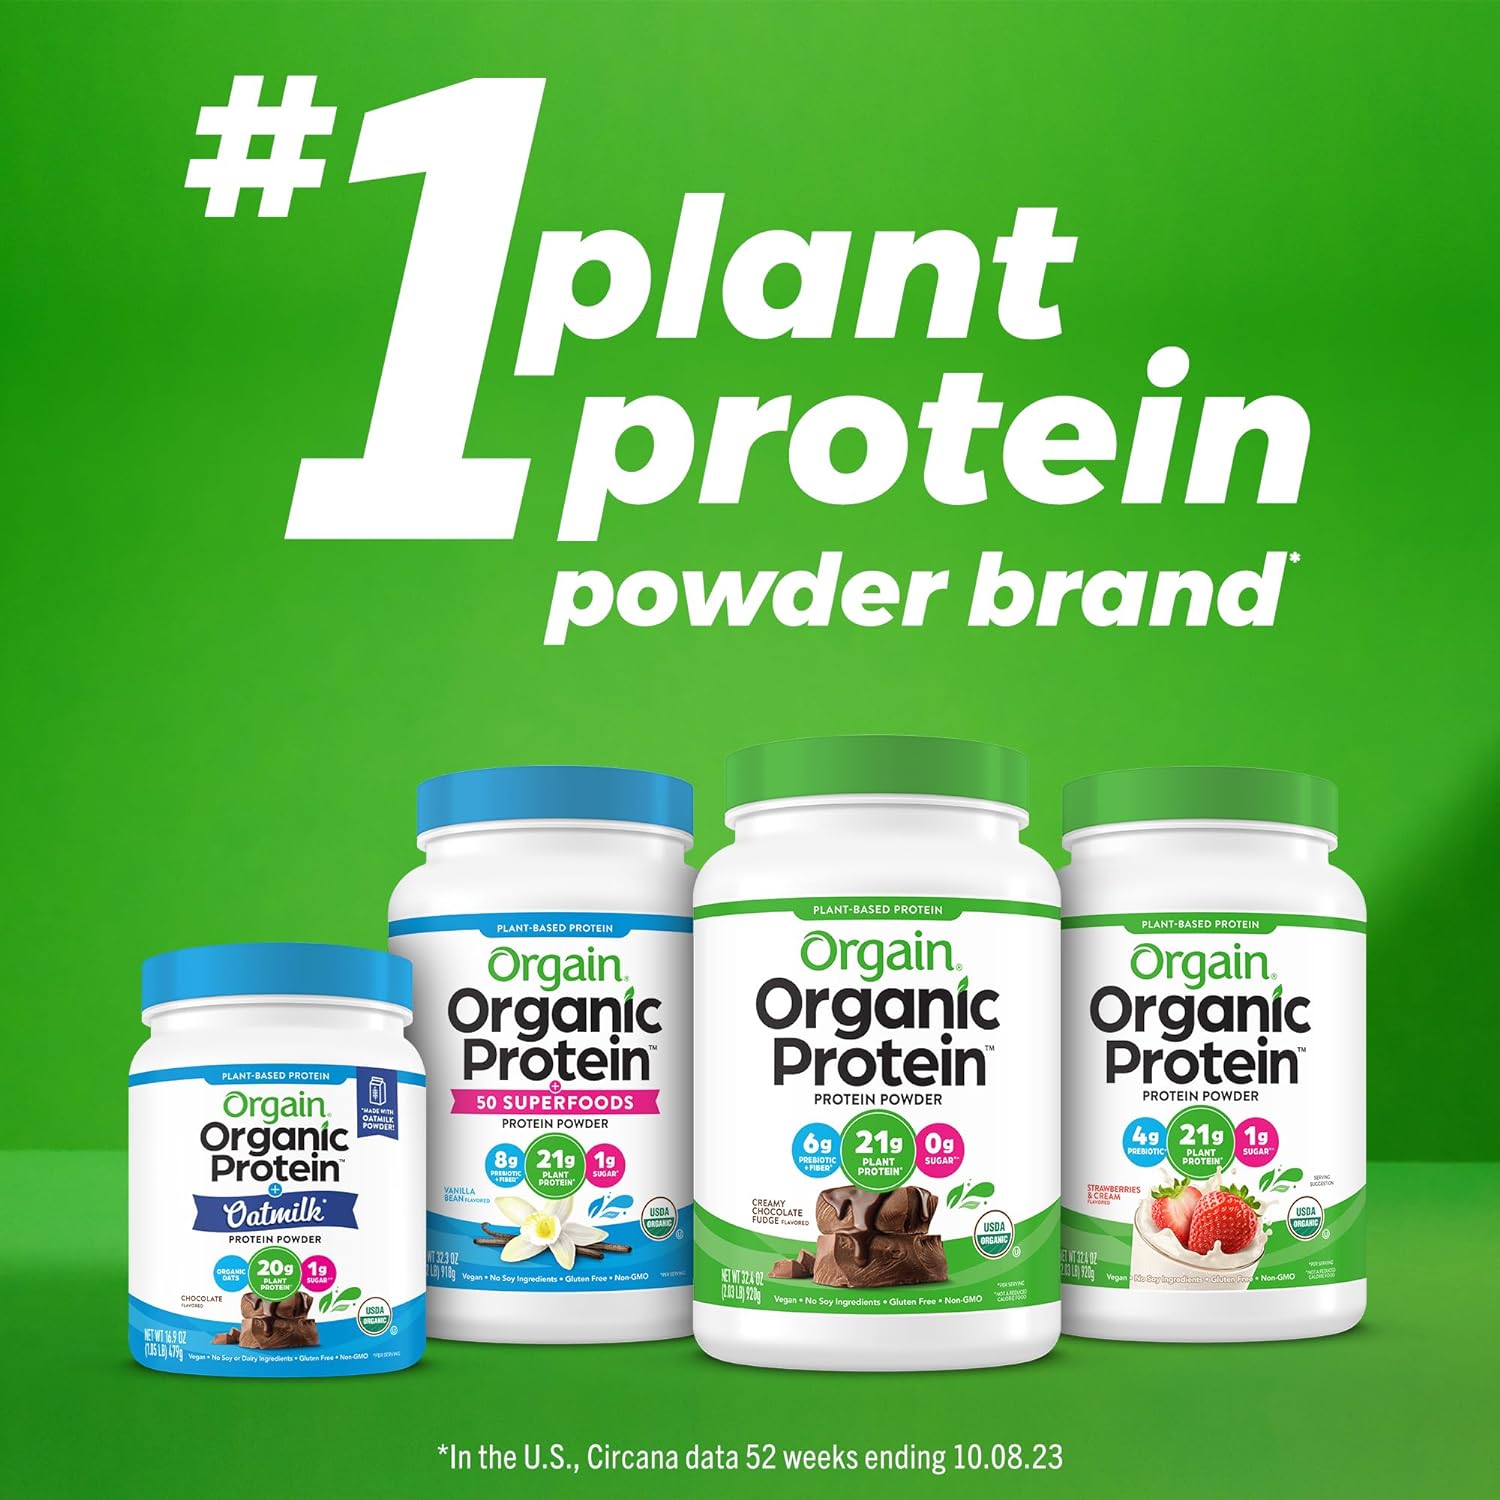 Orgain Organic Vegan Protein Powder, Cookies and Cream - 21g Plant Bas